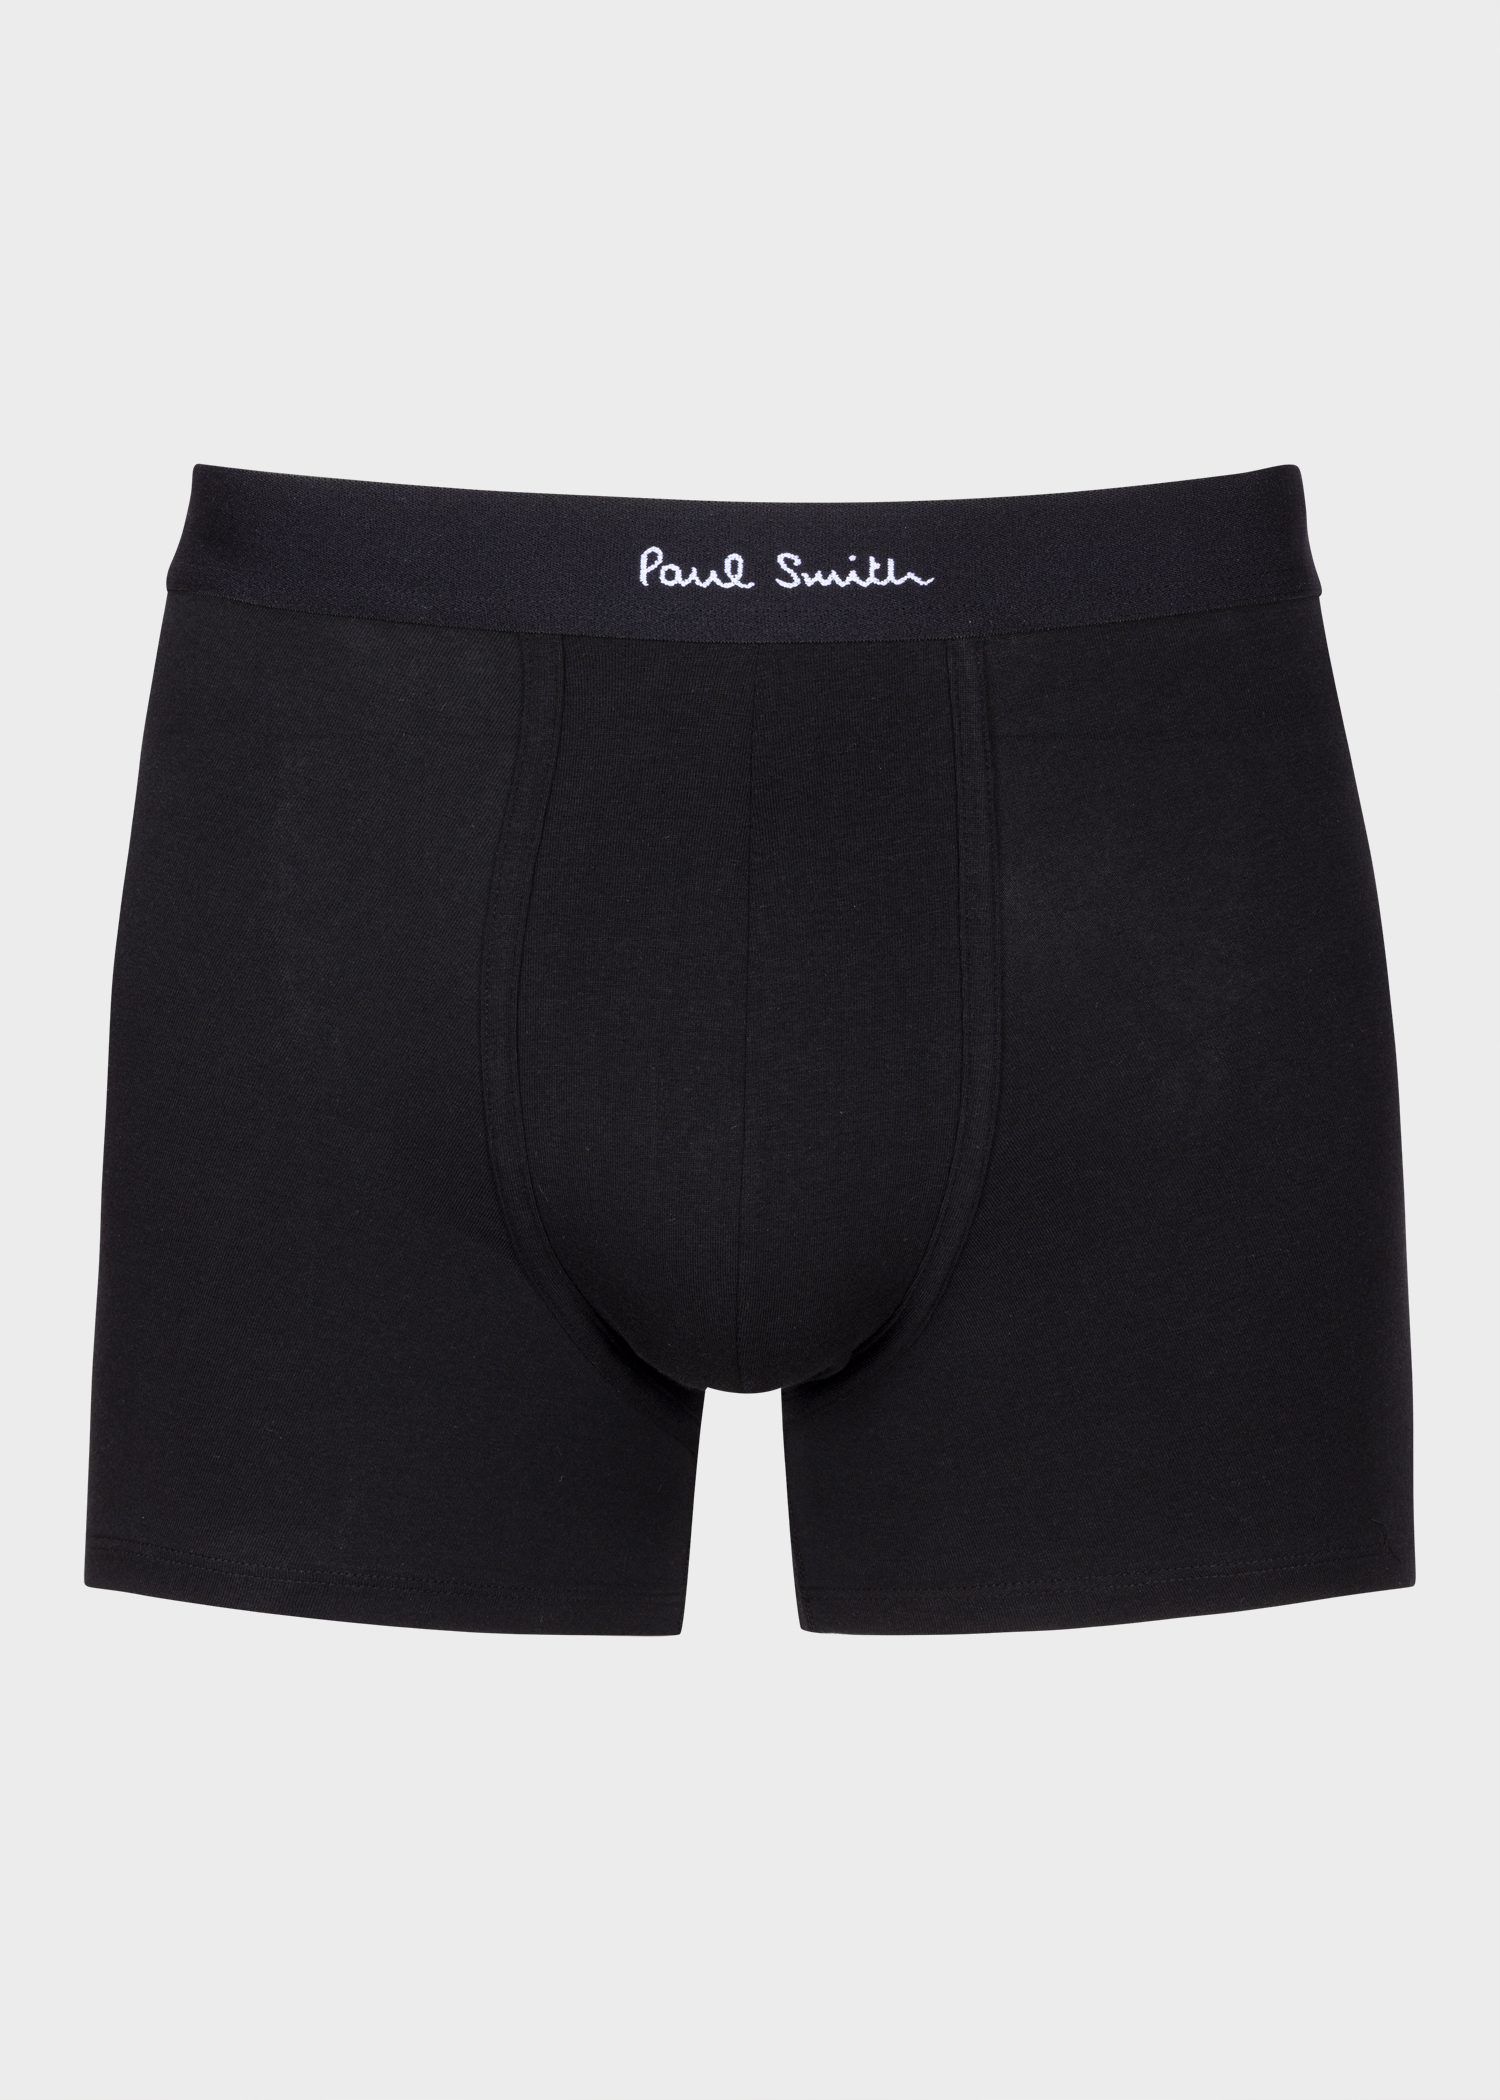 Shop Paul Smith Junior Underwear & Lounge (M1A914M3PKP1A) by EMREMR